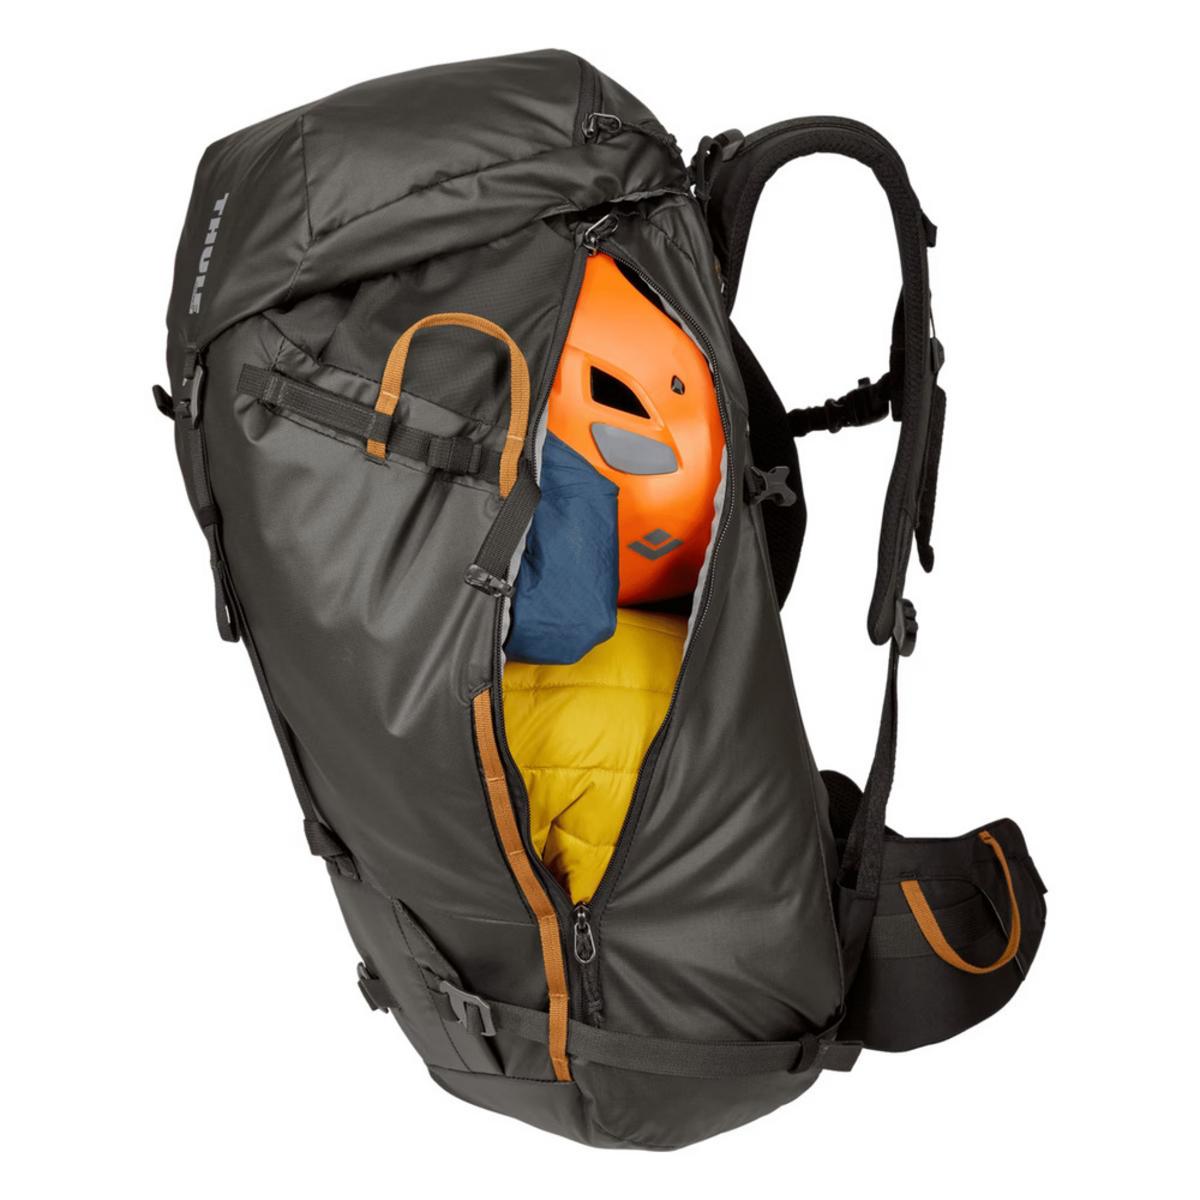 Thule Stir Alpine 40L Hiking Backpack - Obsidian